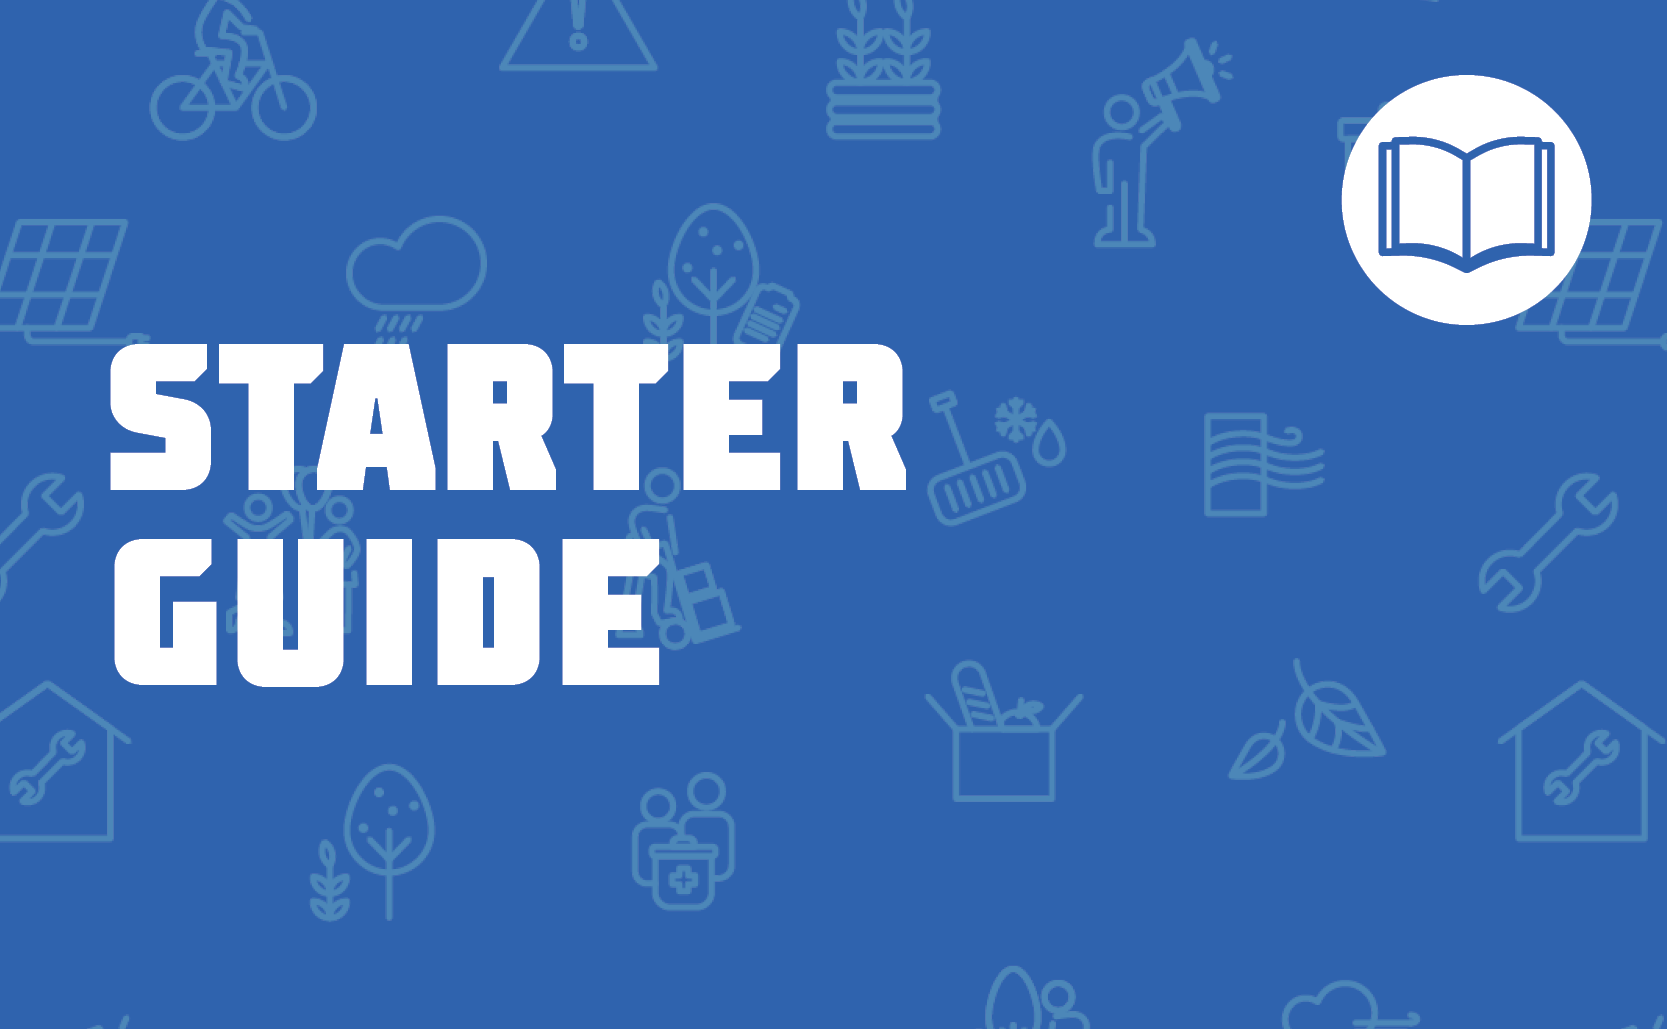 Starter Guide. Blue background.